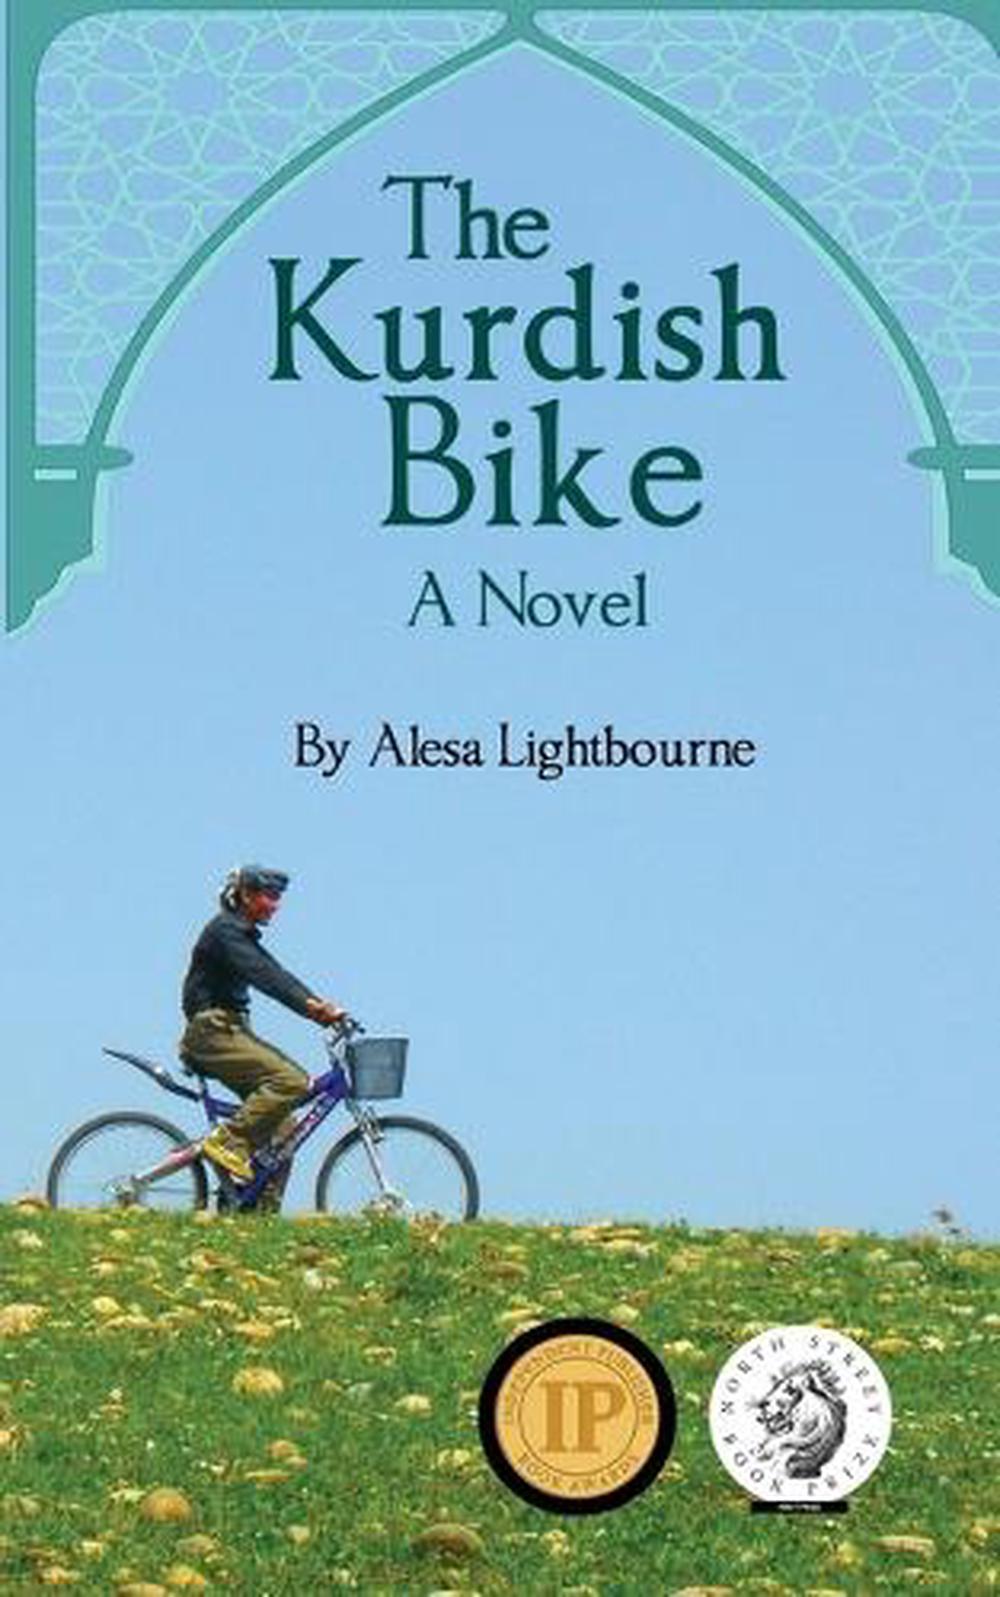 The Kurdish Bike by Alesa Lightbourne